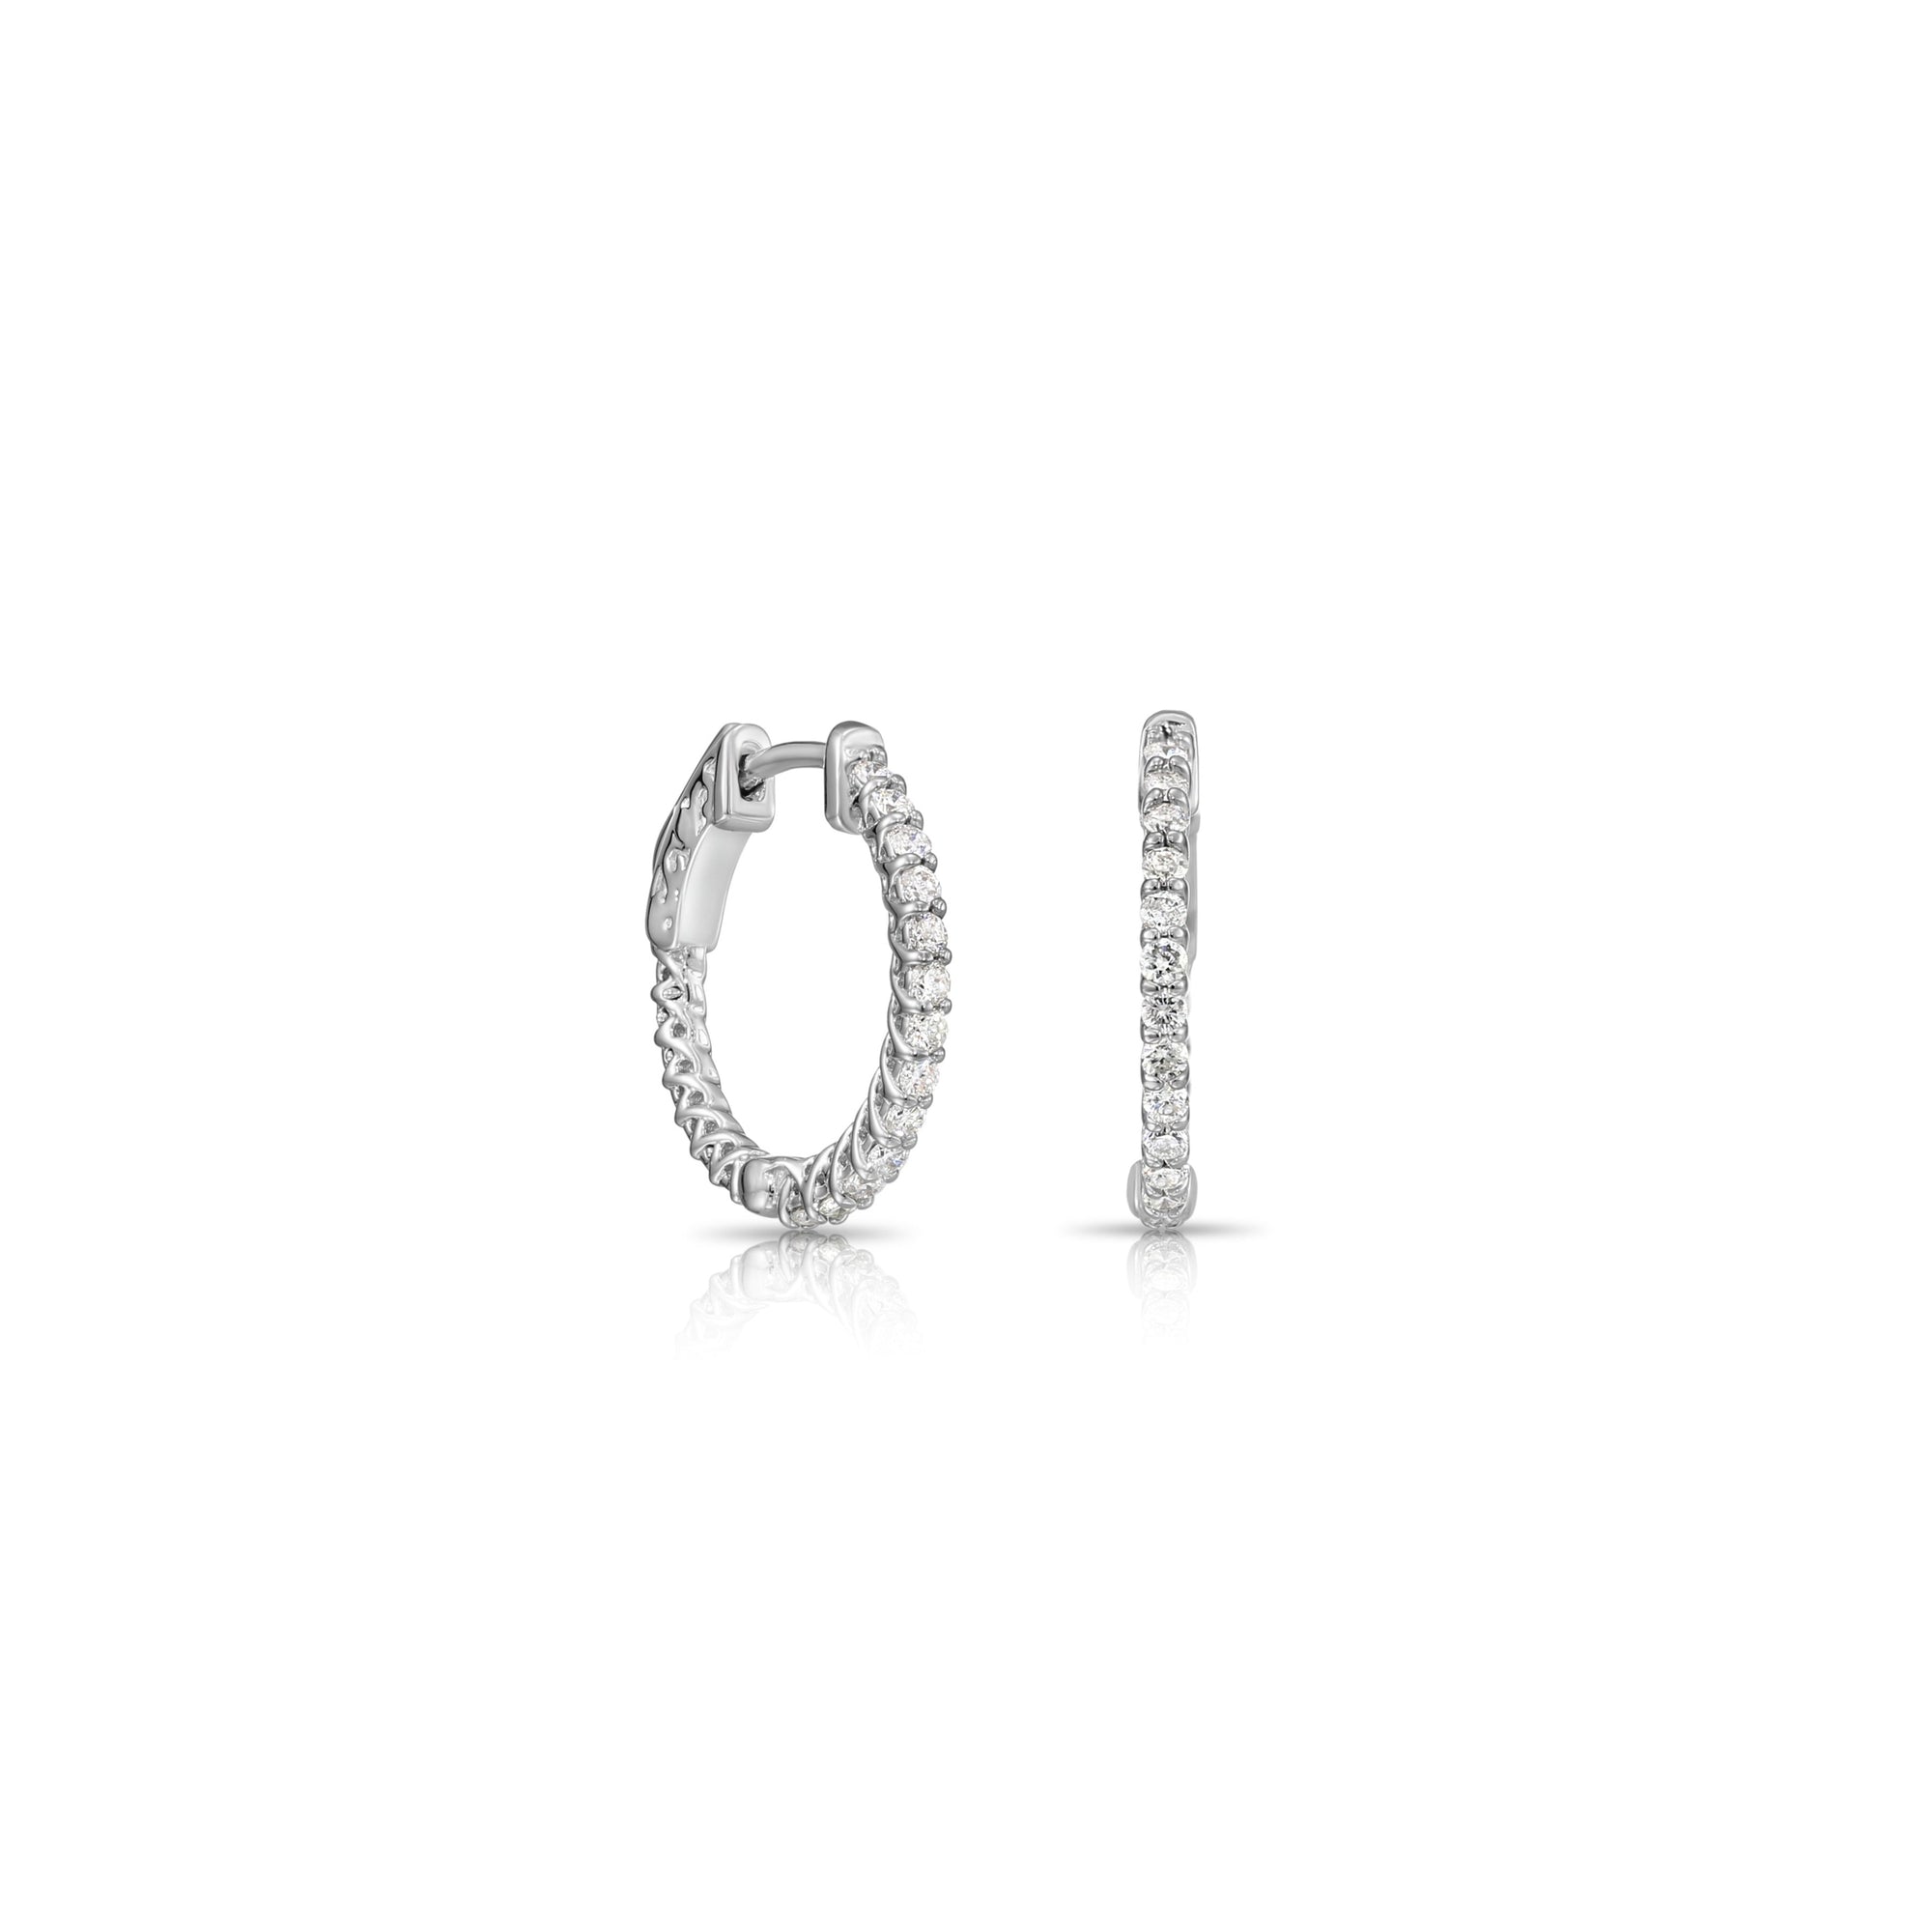 14k White Gold Diamond Hoop Earrings, 0.52 carats